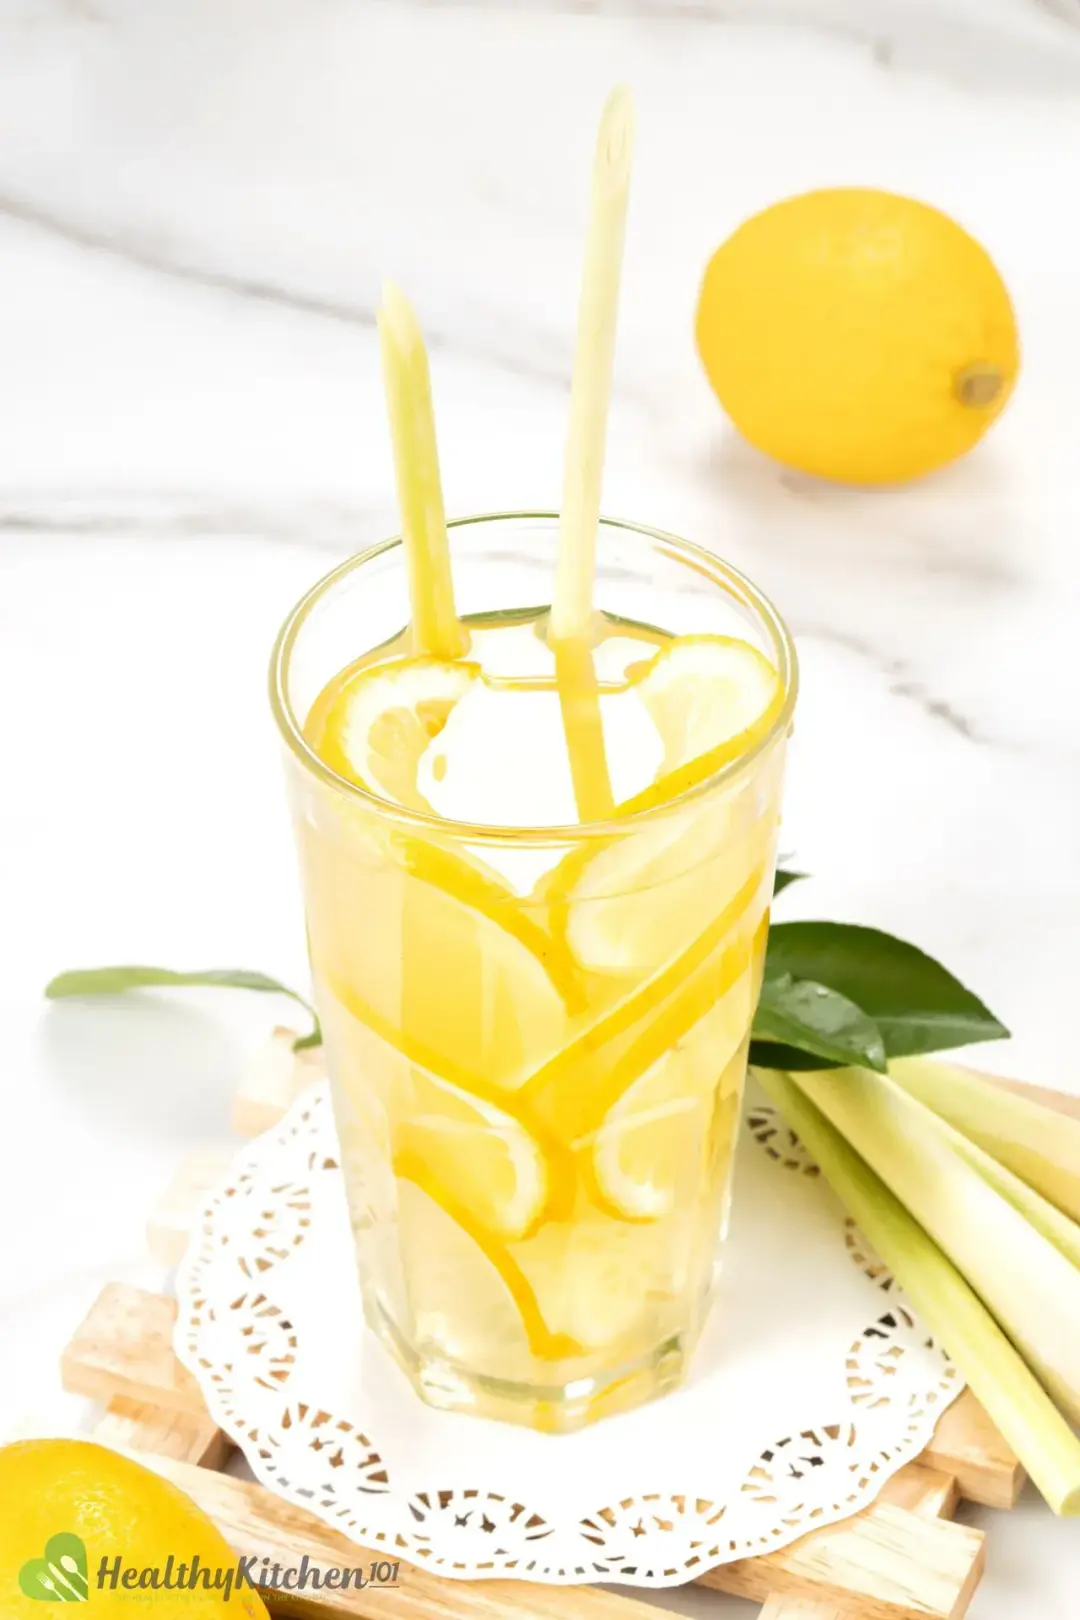 A drink of lemon juice and cider full of lemon wheels put next to lemongrass stalks and lemon leaves